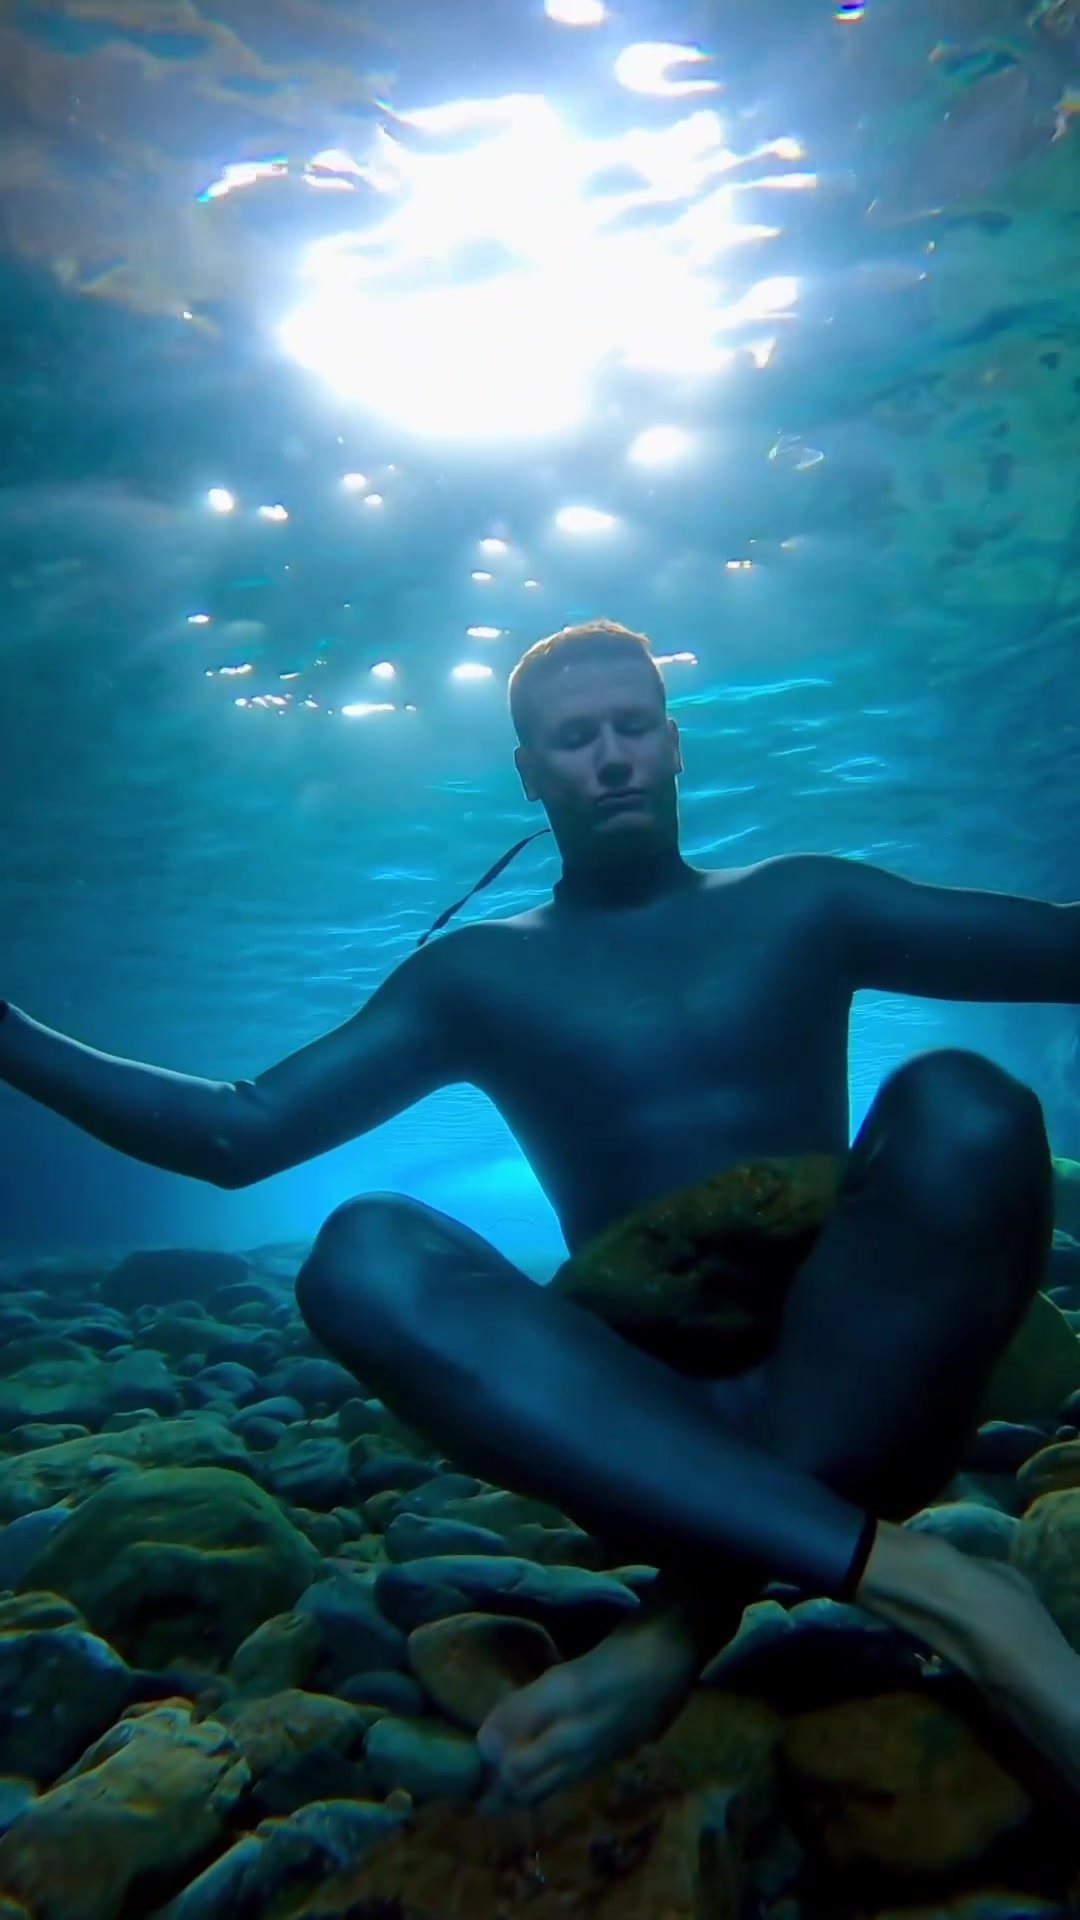 Underwater barefaced hottie in tight wetsuit